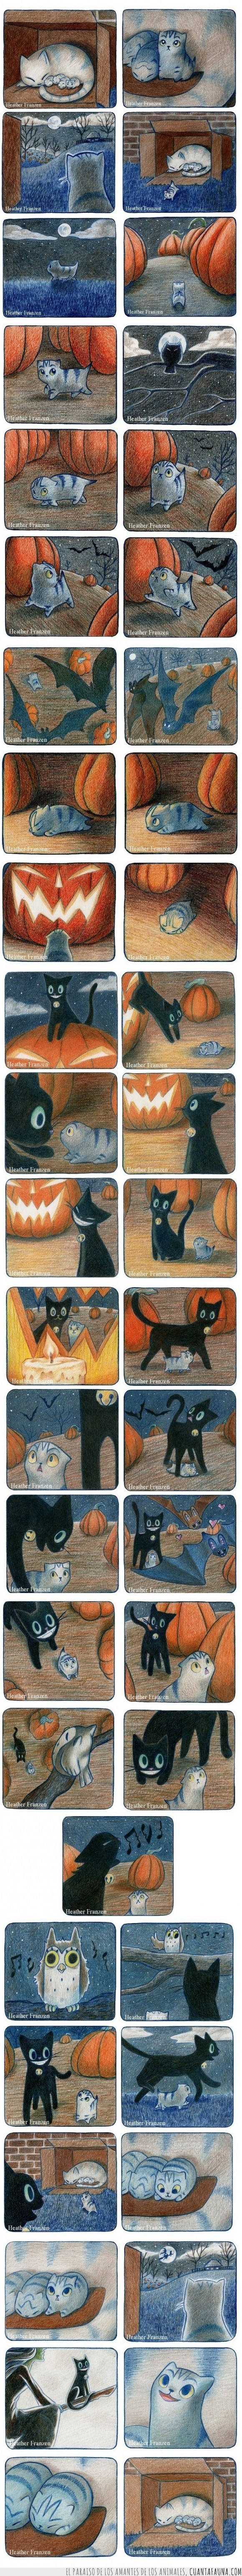 Gato,miedo,halloween,noche,amigo,amistad